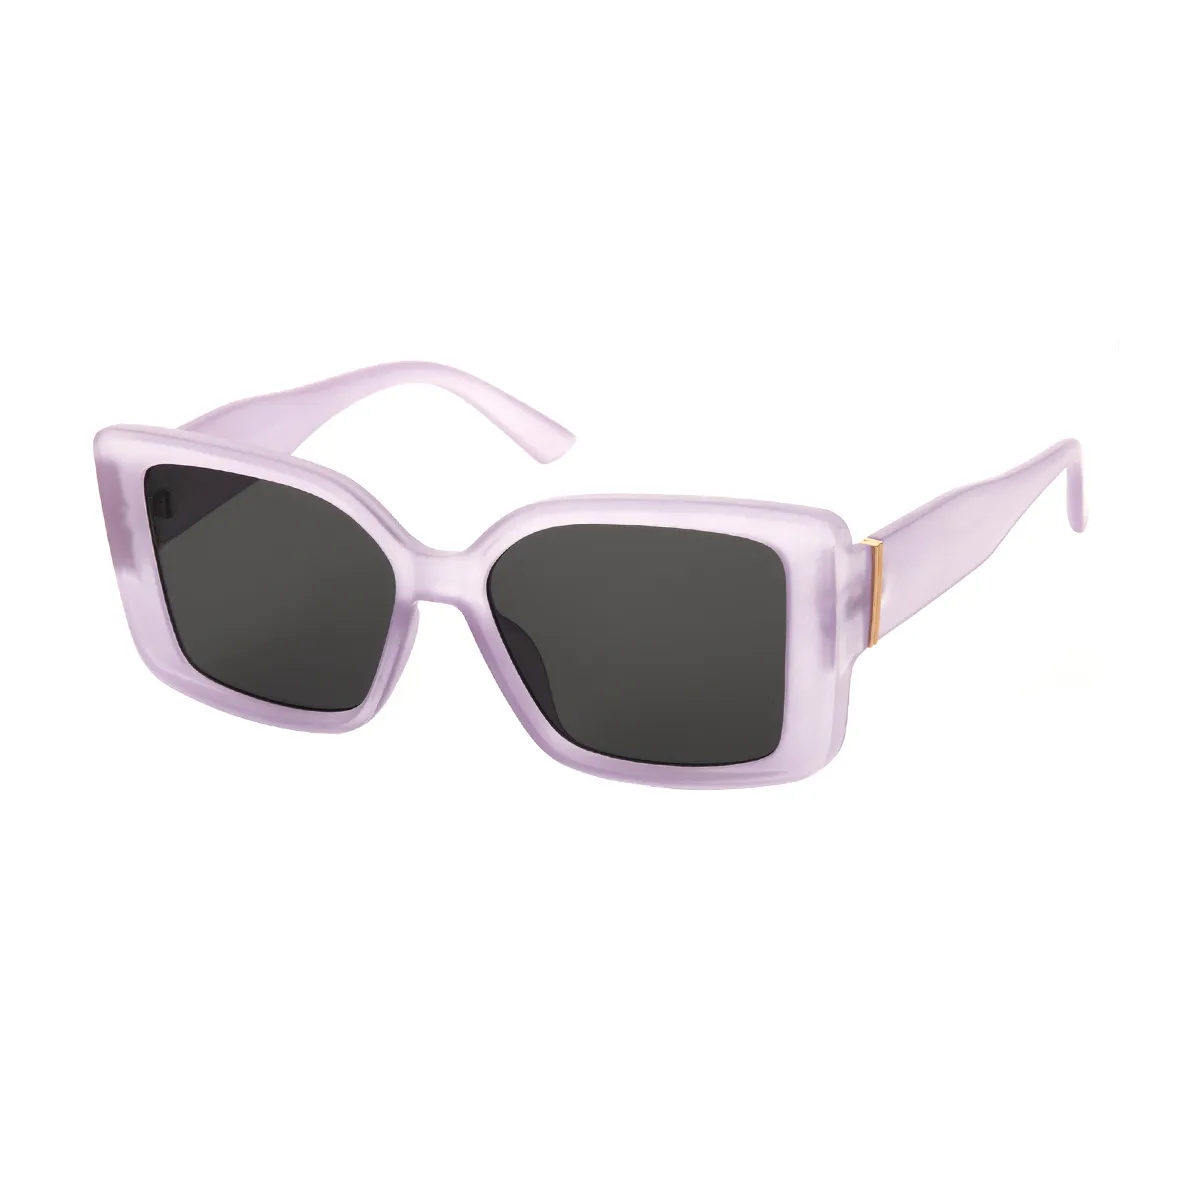 Pheebe - Square Transparent Purple Sunglasses for Women